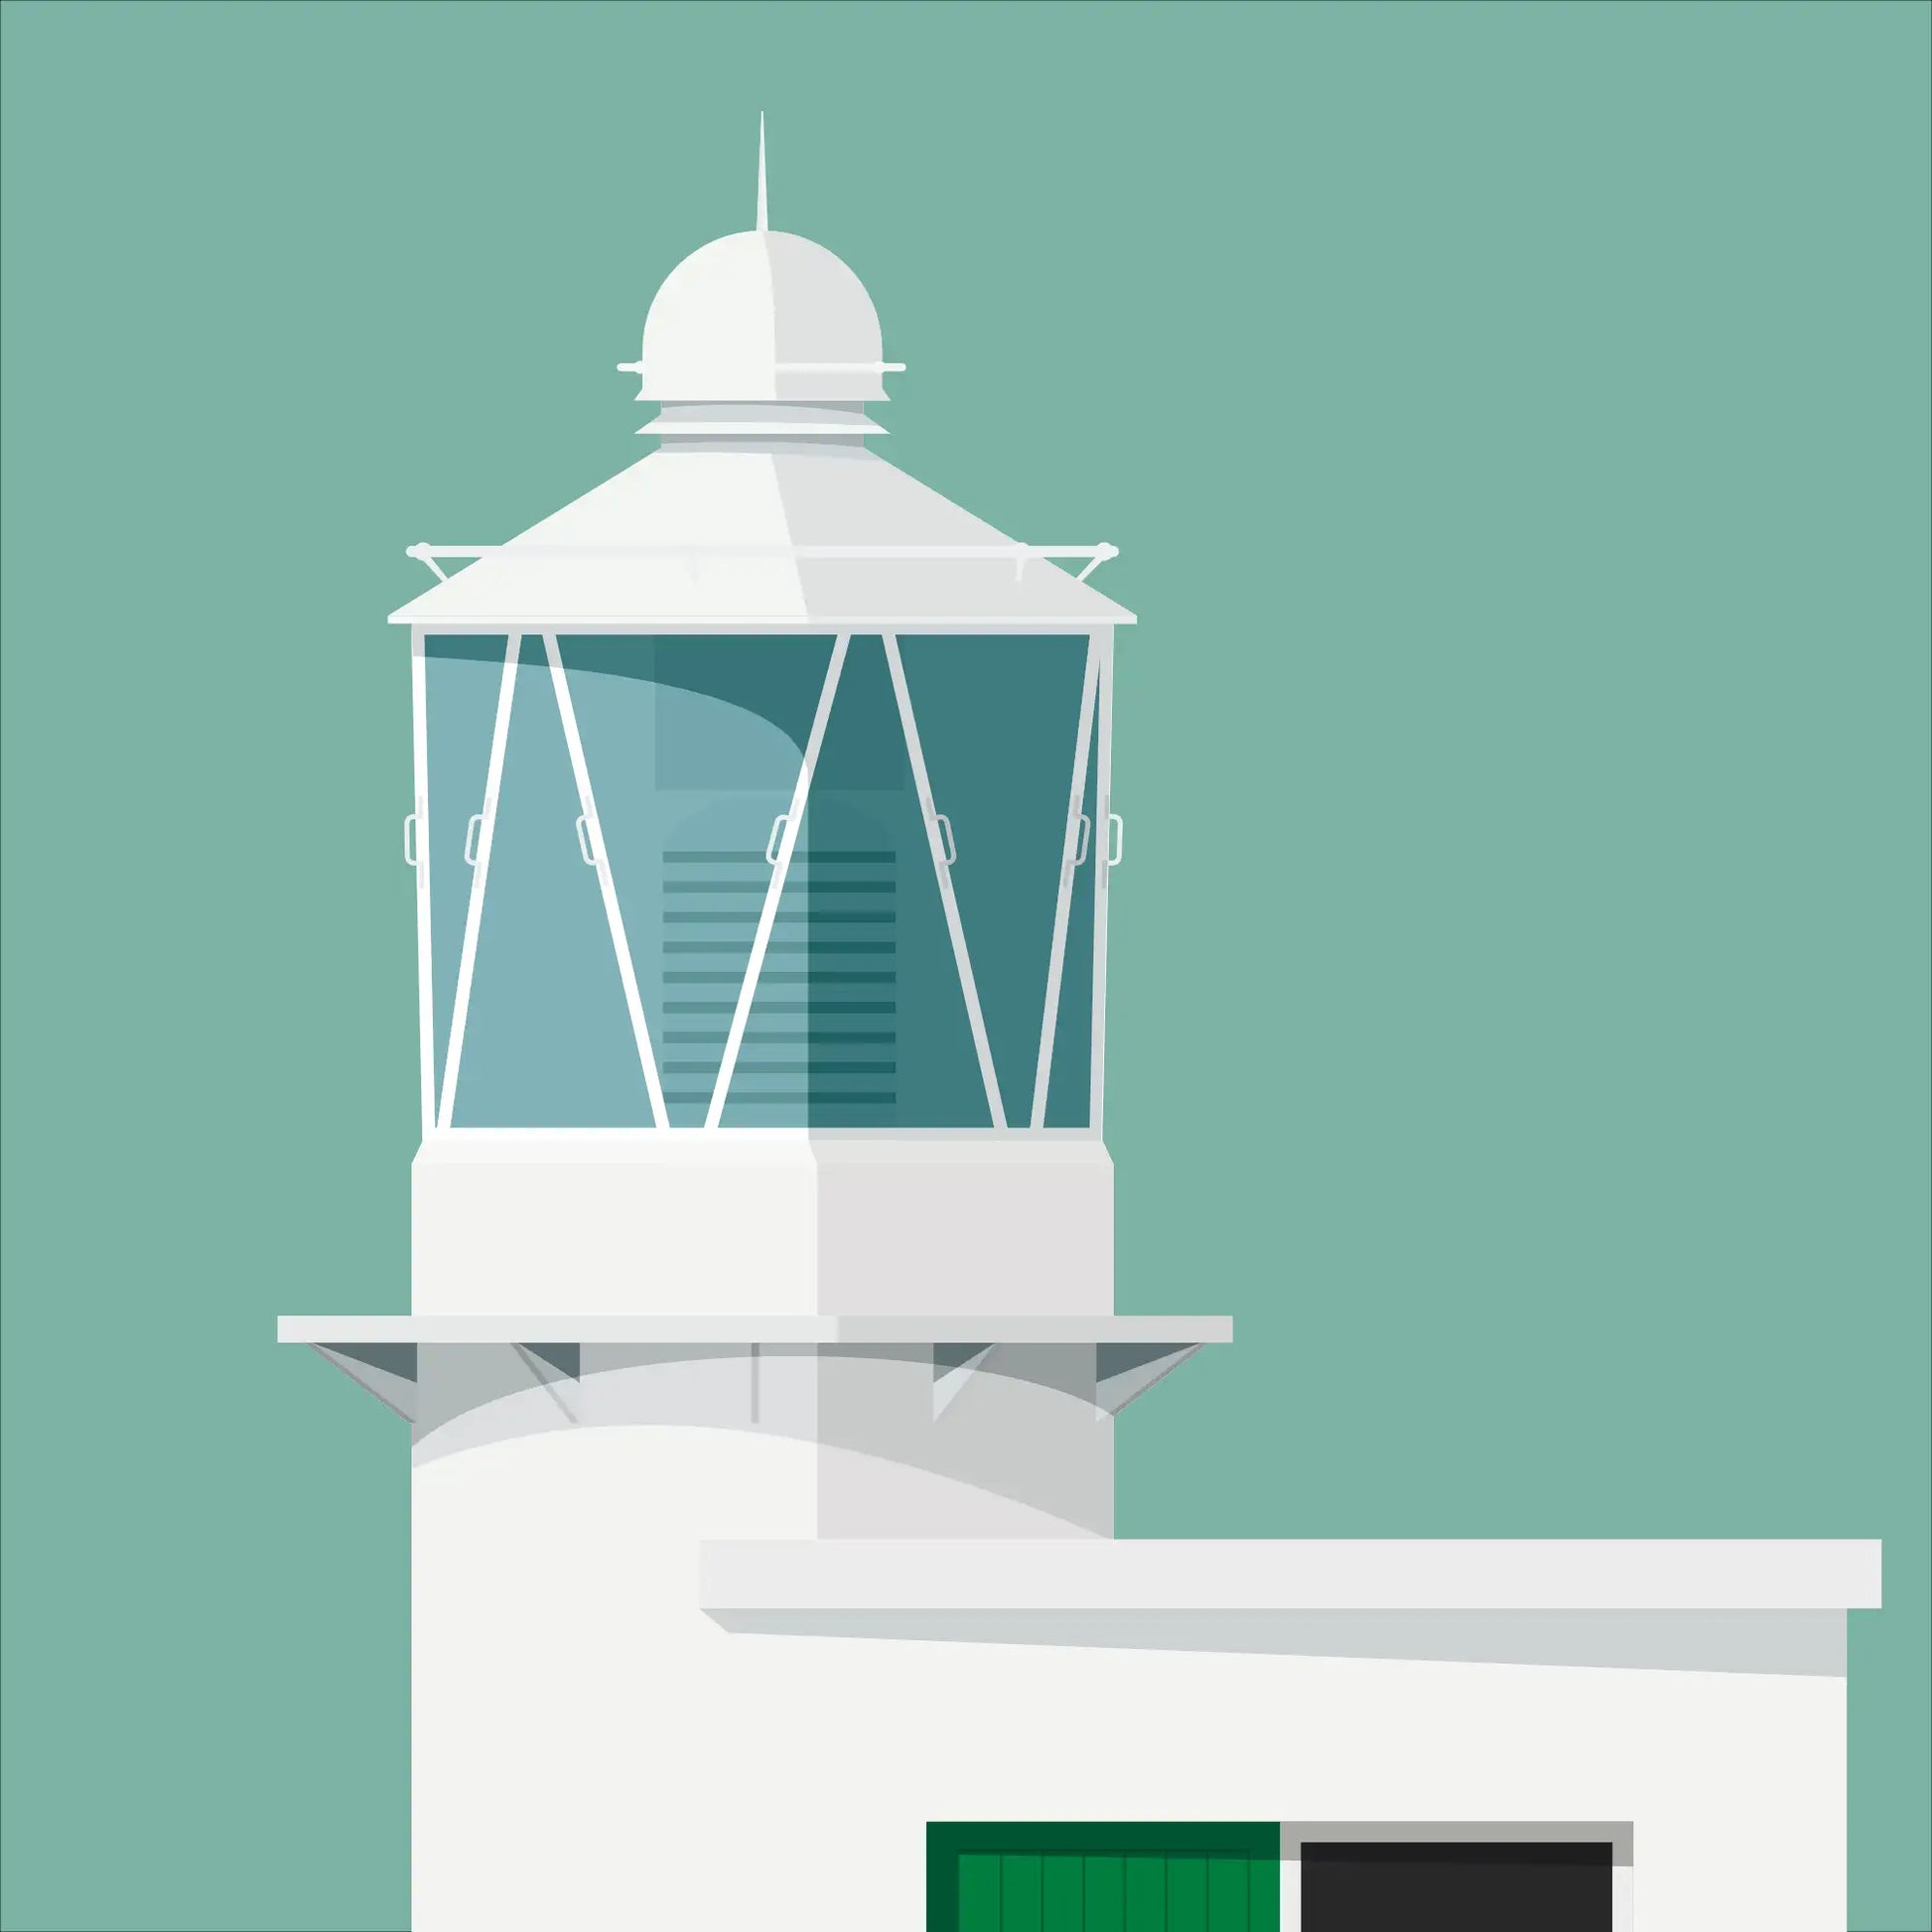 Achillbeg lighthouse, County Mayo, Ireland detail